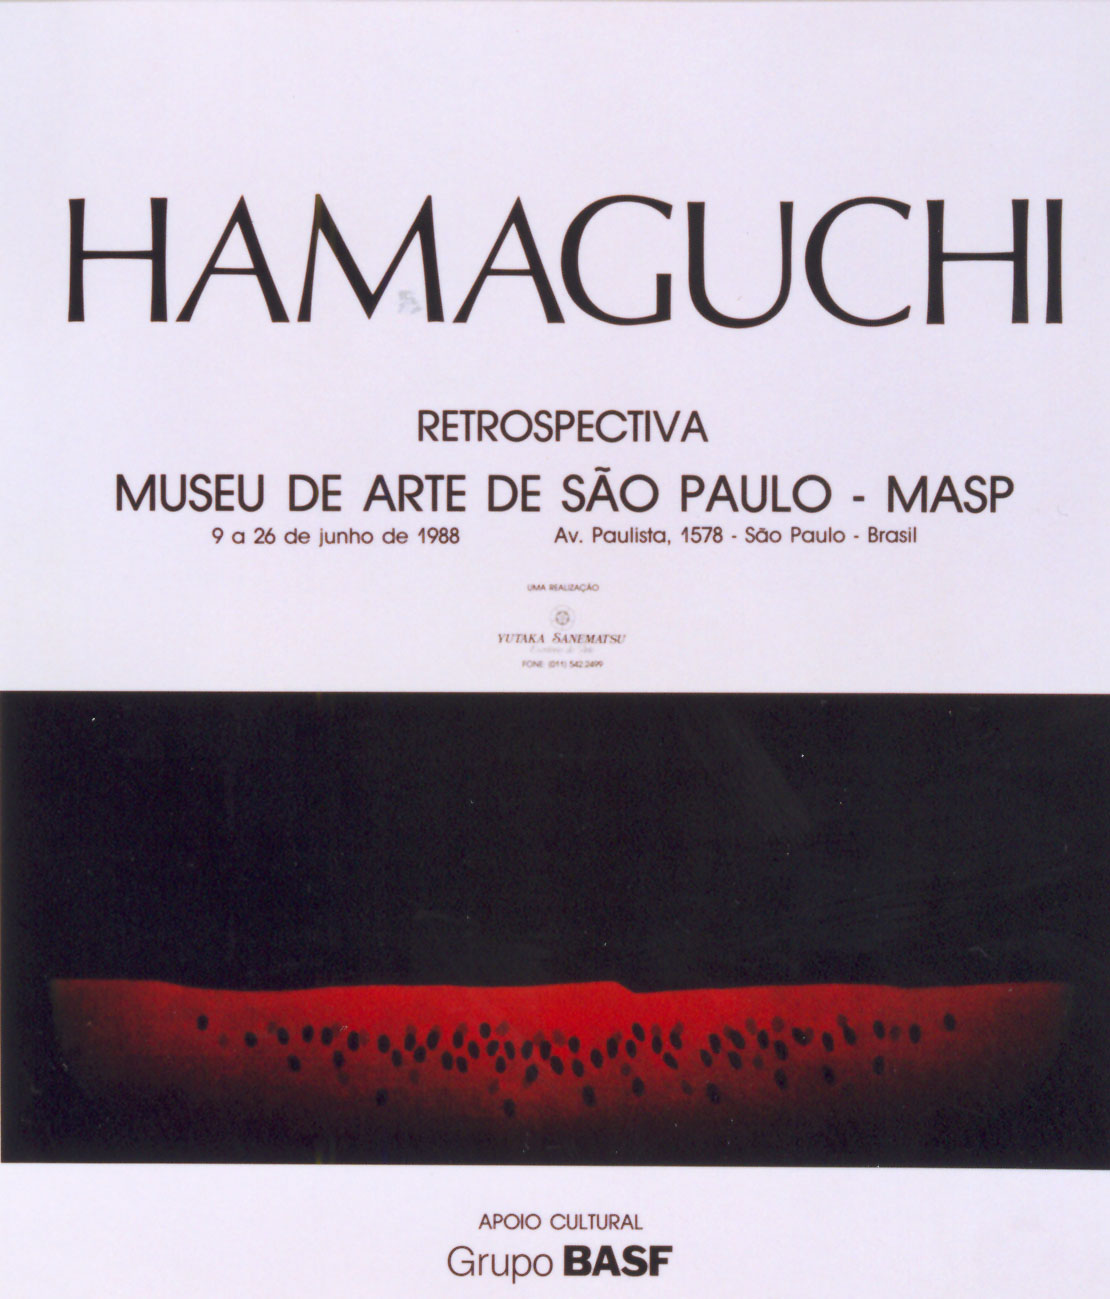 Hamaguchi